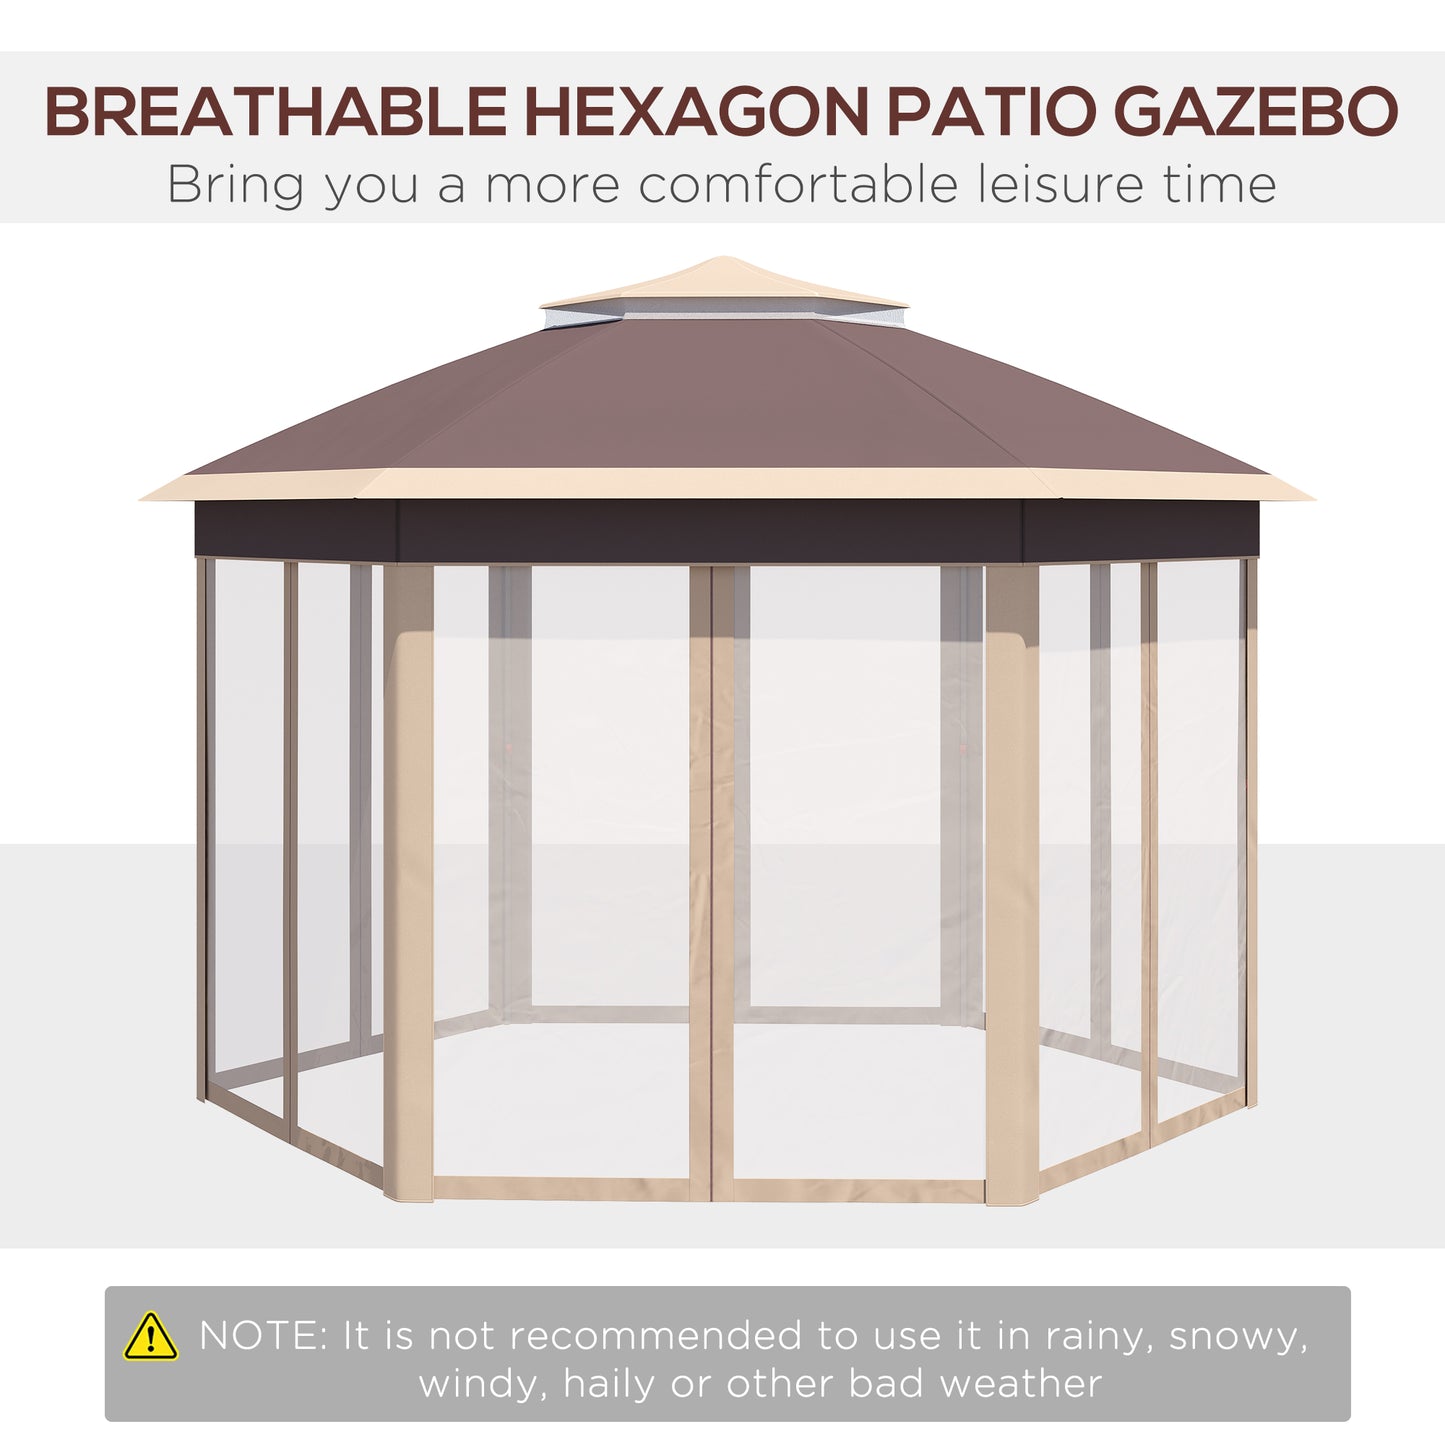 Outsunny Hexagon Pop Up Gazebo Outdoor Patio Gazebo Double Roof Instant Shelter with Netting, 3 x 4m, Khaki